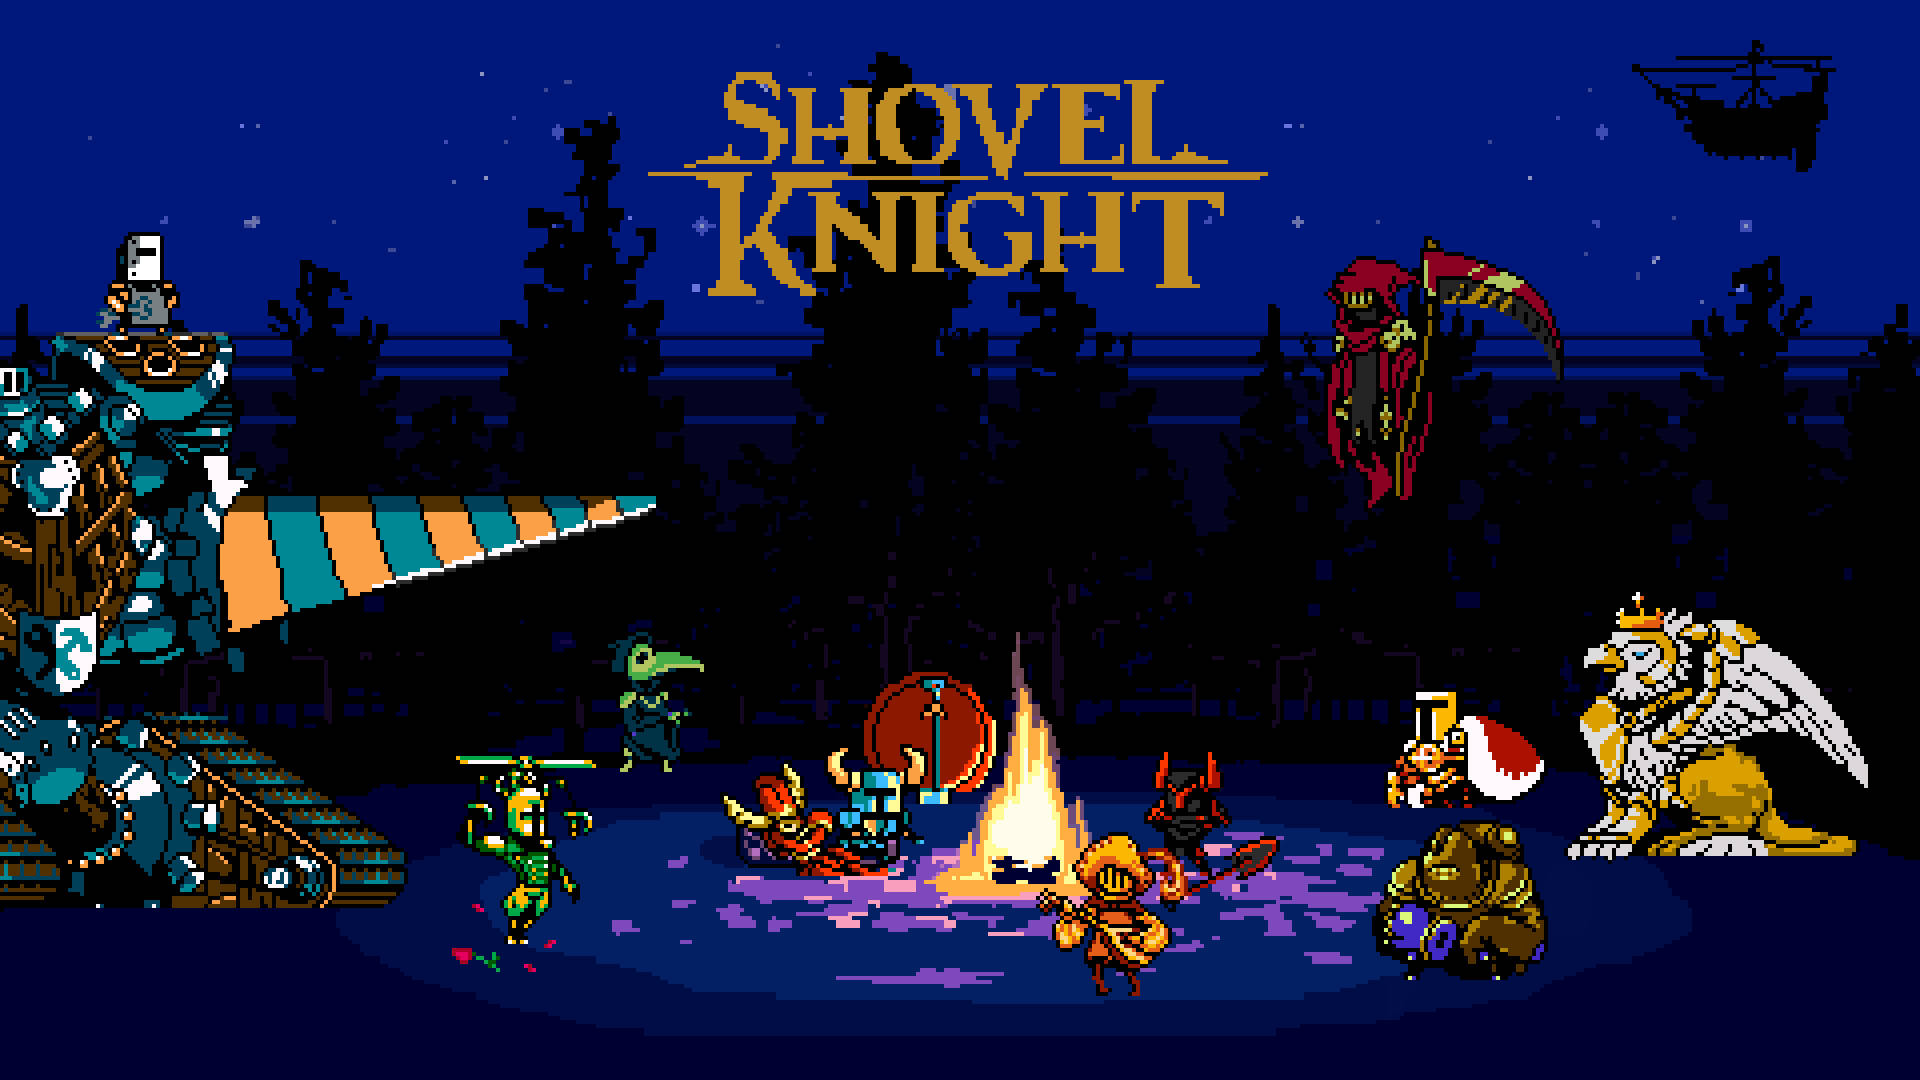 Shovel Knight Retro Pixel Art Wallpaper